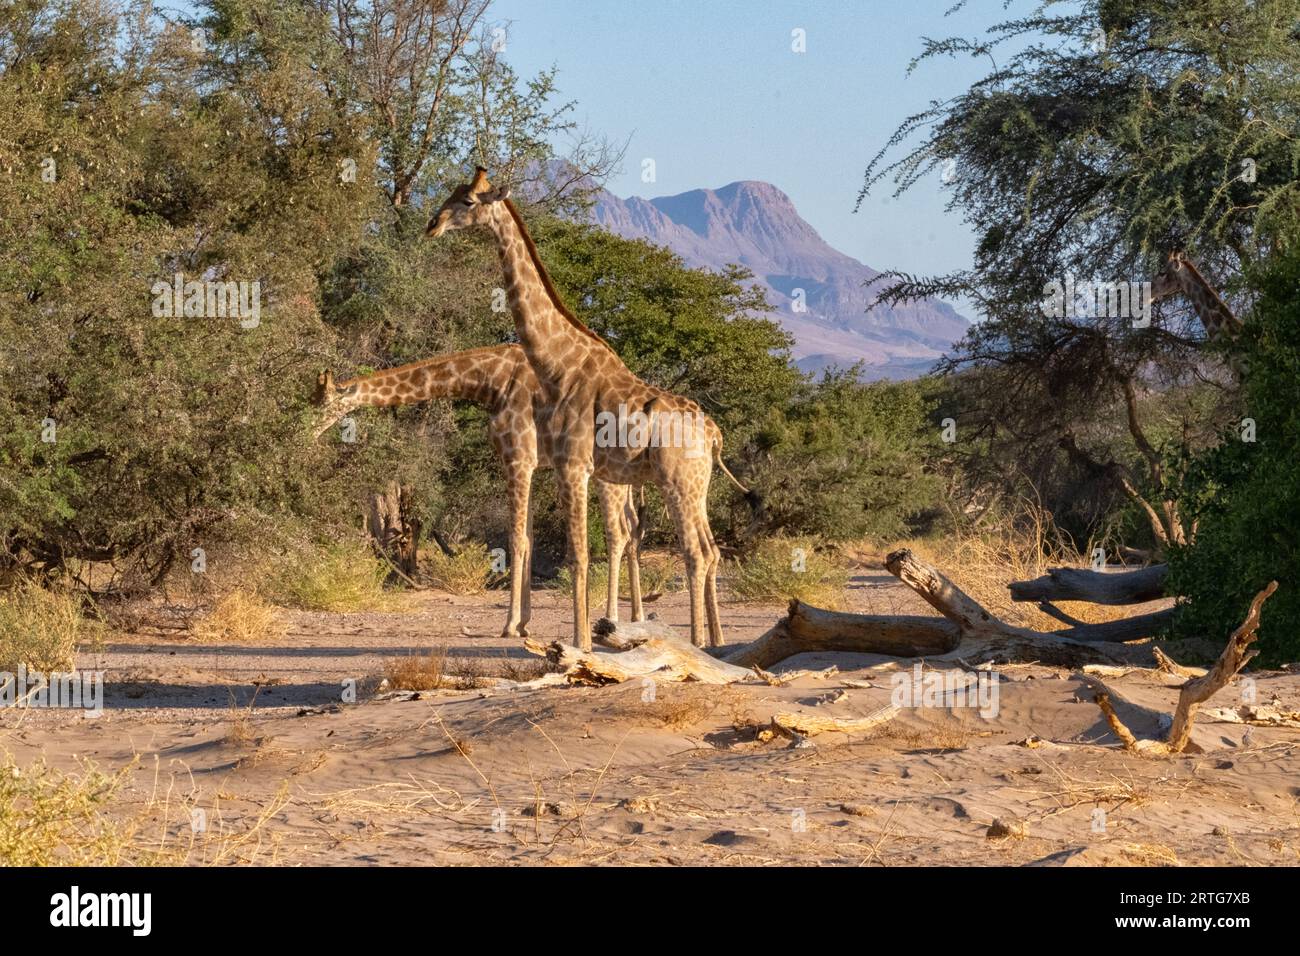 Giraffes in the desert of Damaraland in Namibia Stock Photo